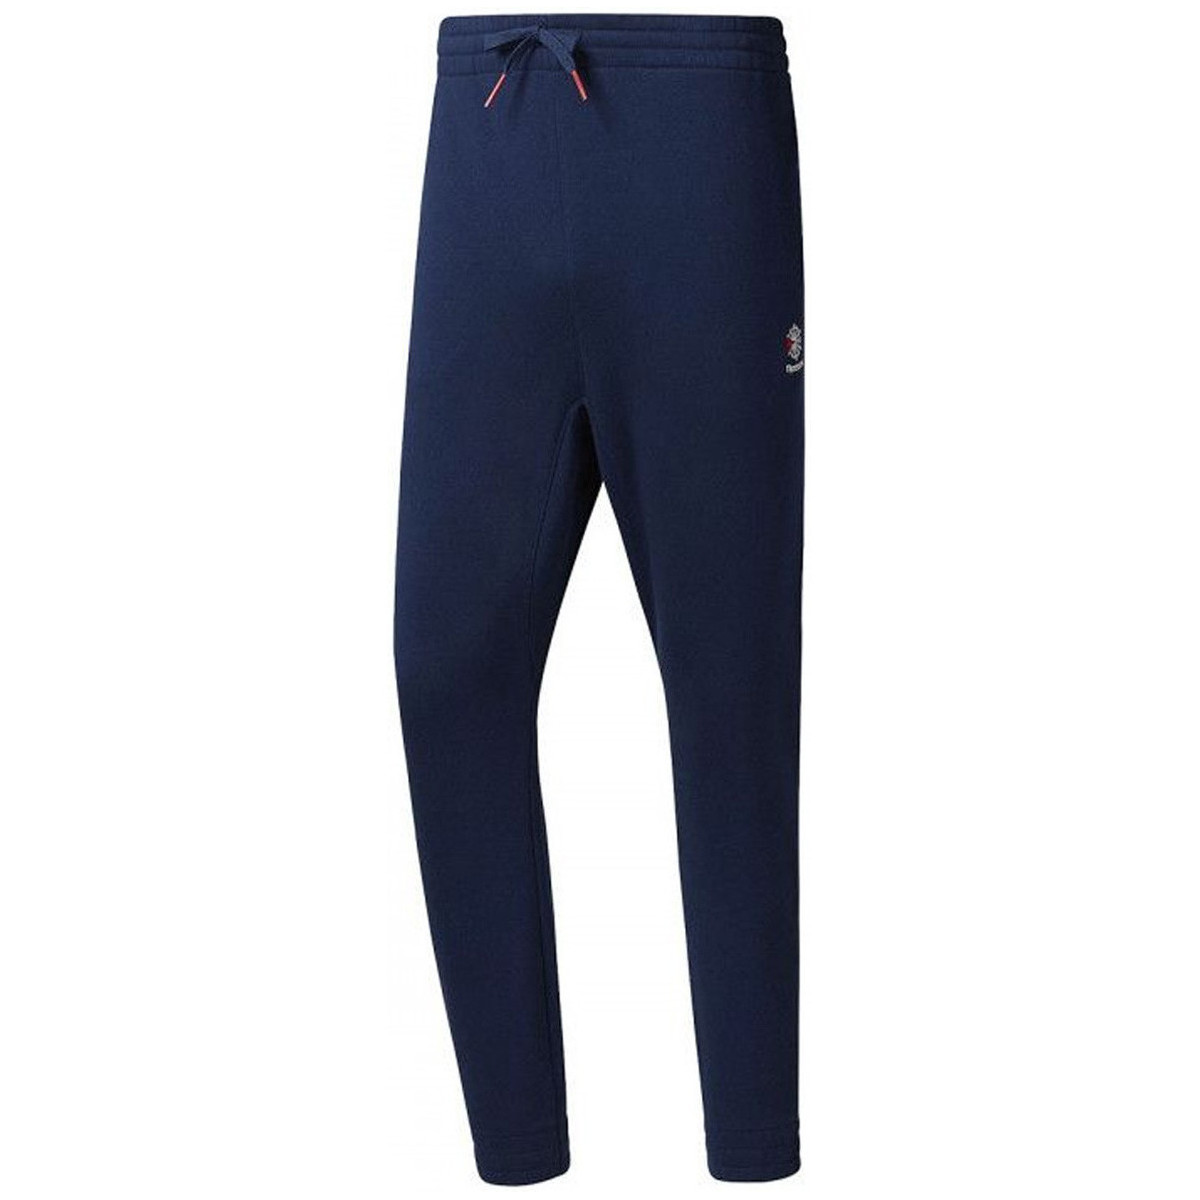 Vêtements Homme Pantalons de survêtement Reebok Sport AC F DIS Bleu